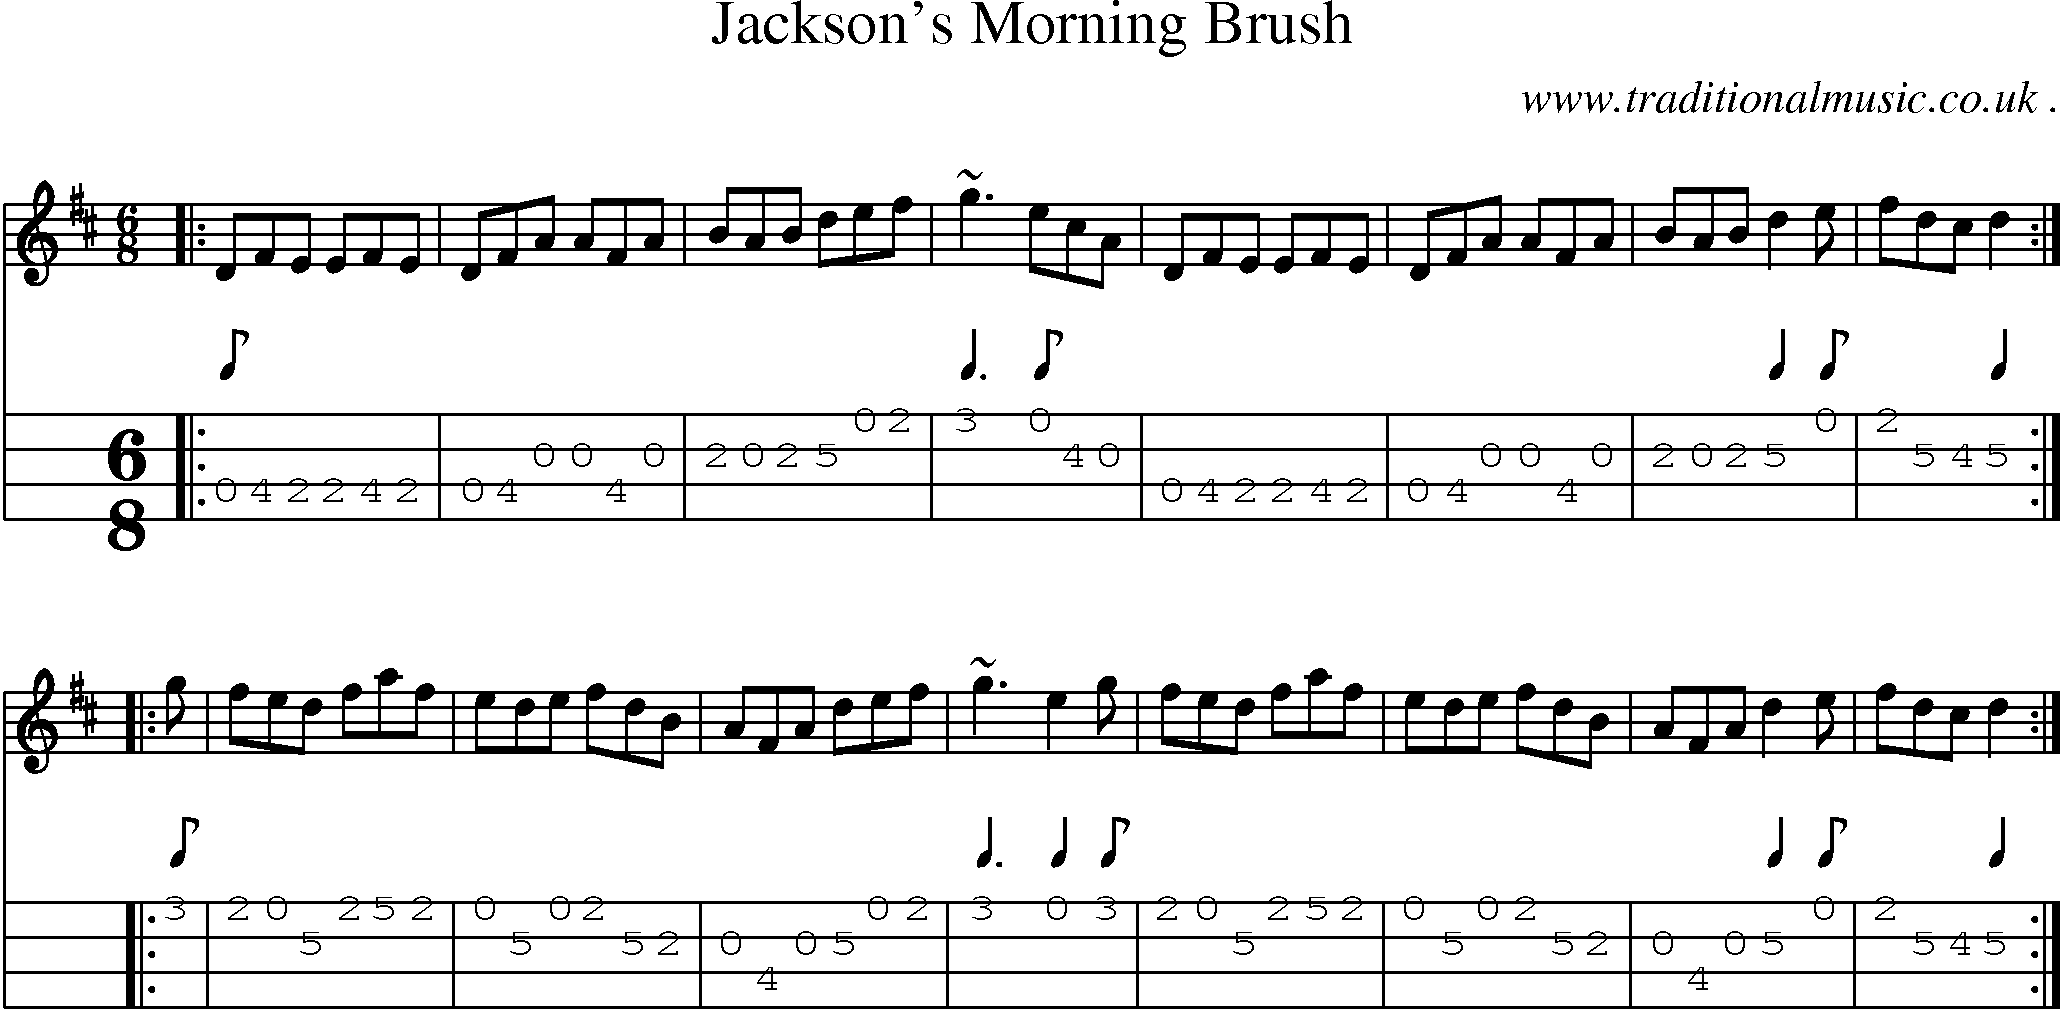 Sheet-music  score, Chords and Mandolin Tabs for Jacksons Morning Brush